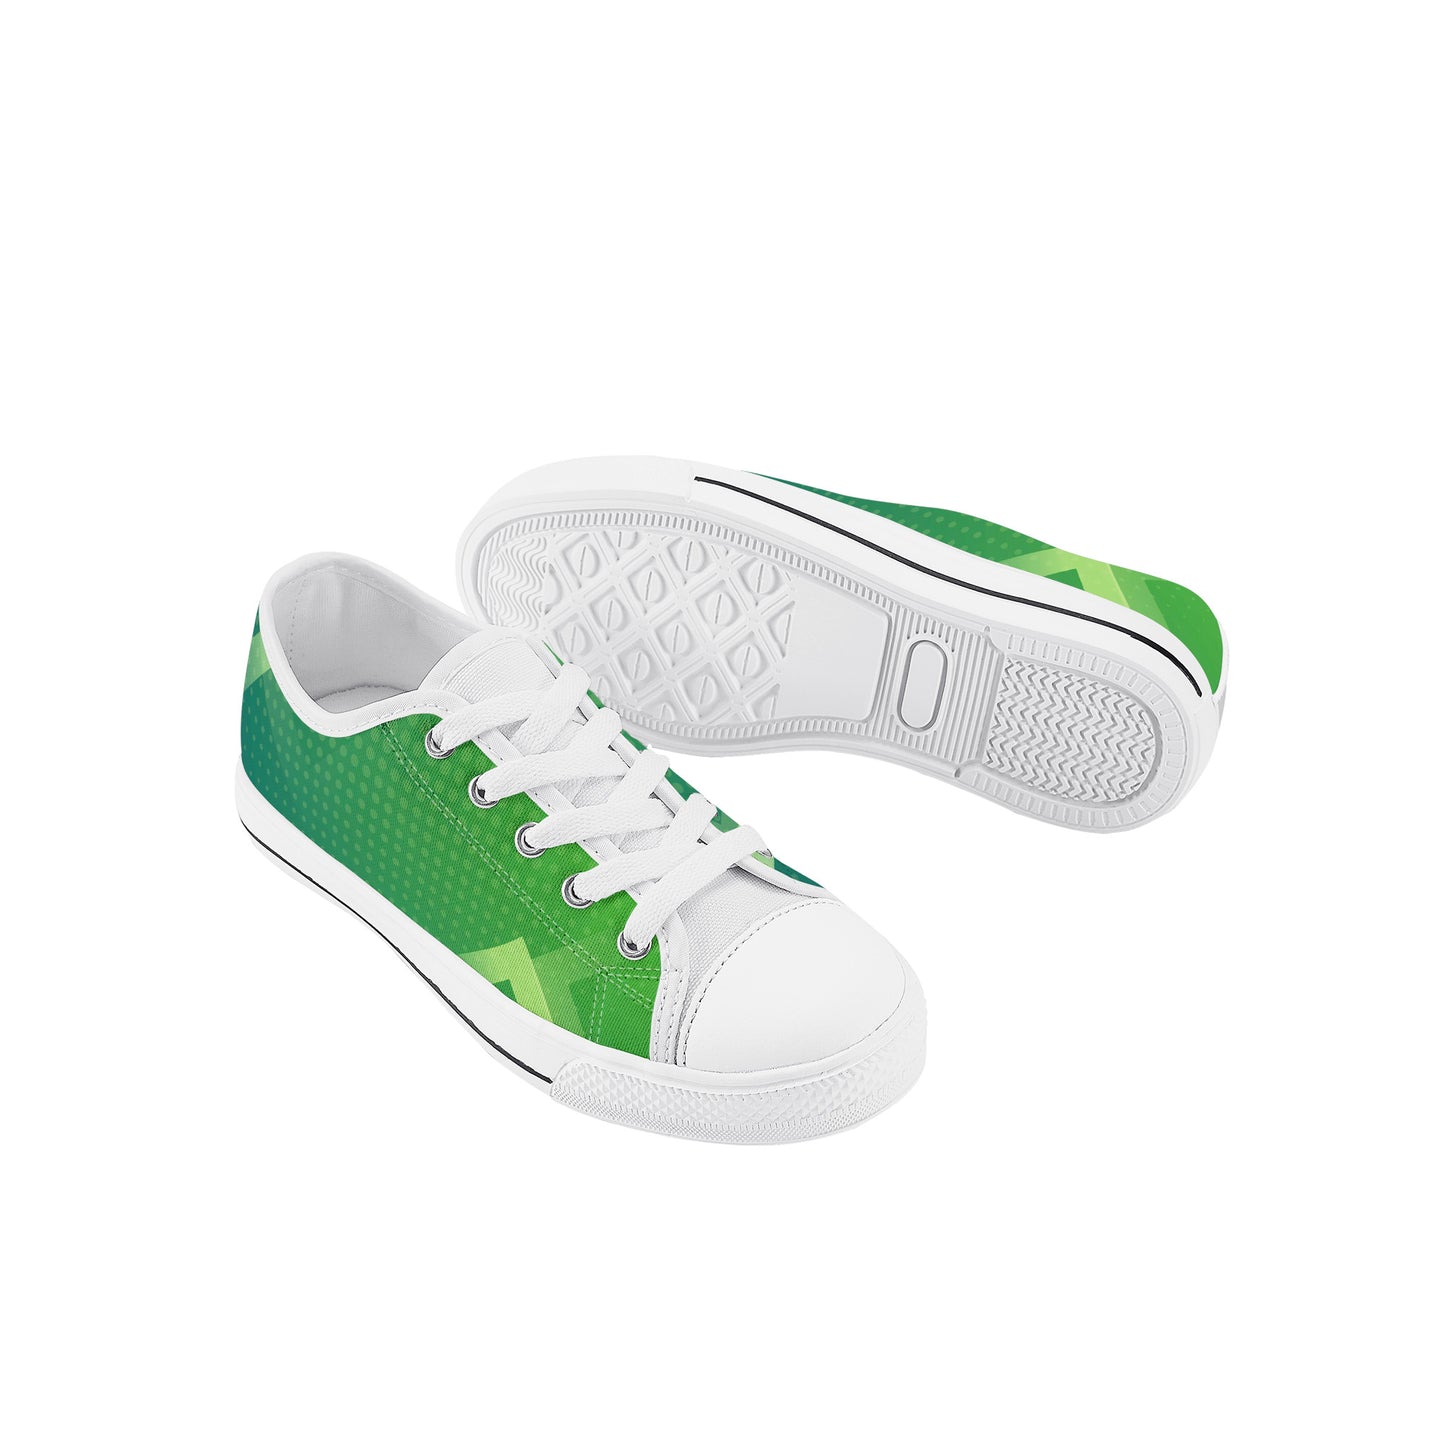 Kids Low Top Canvas Sneakers - Green